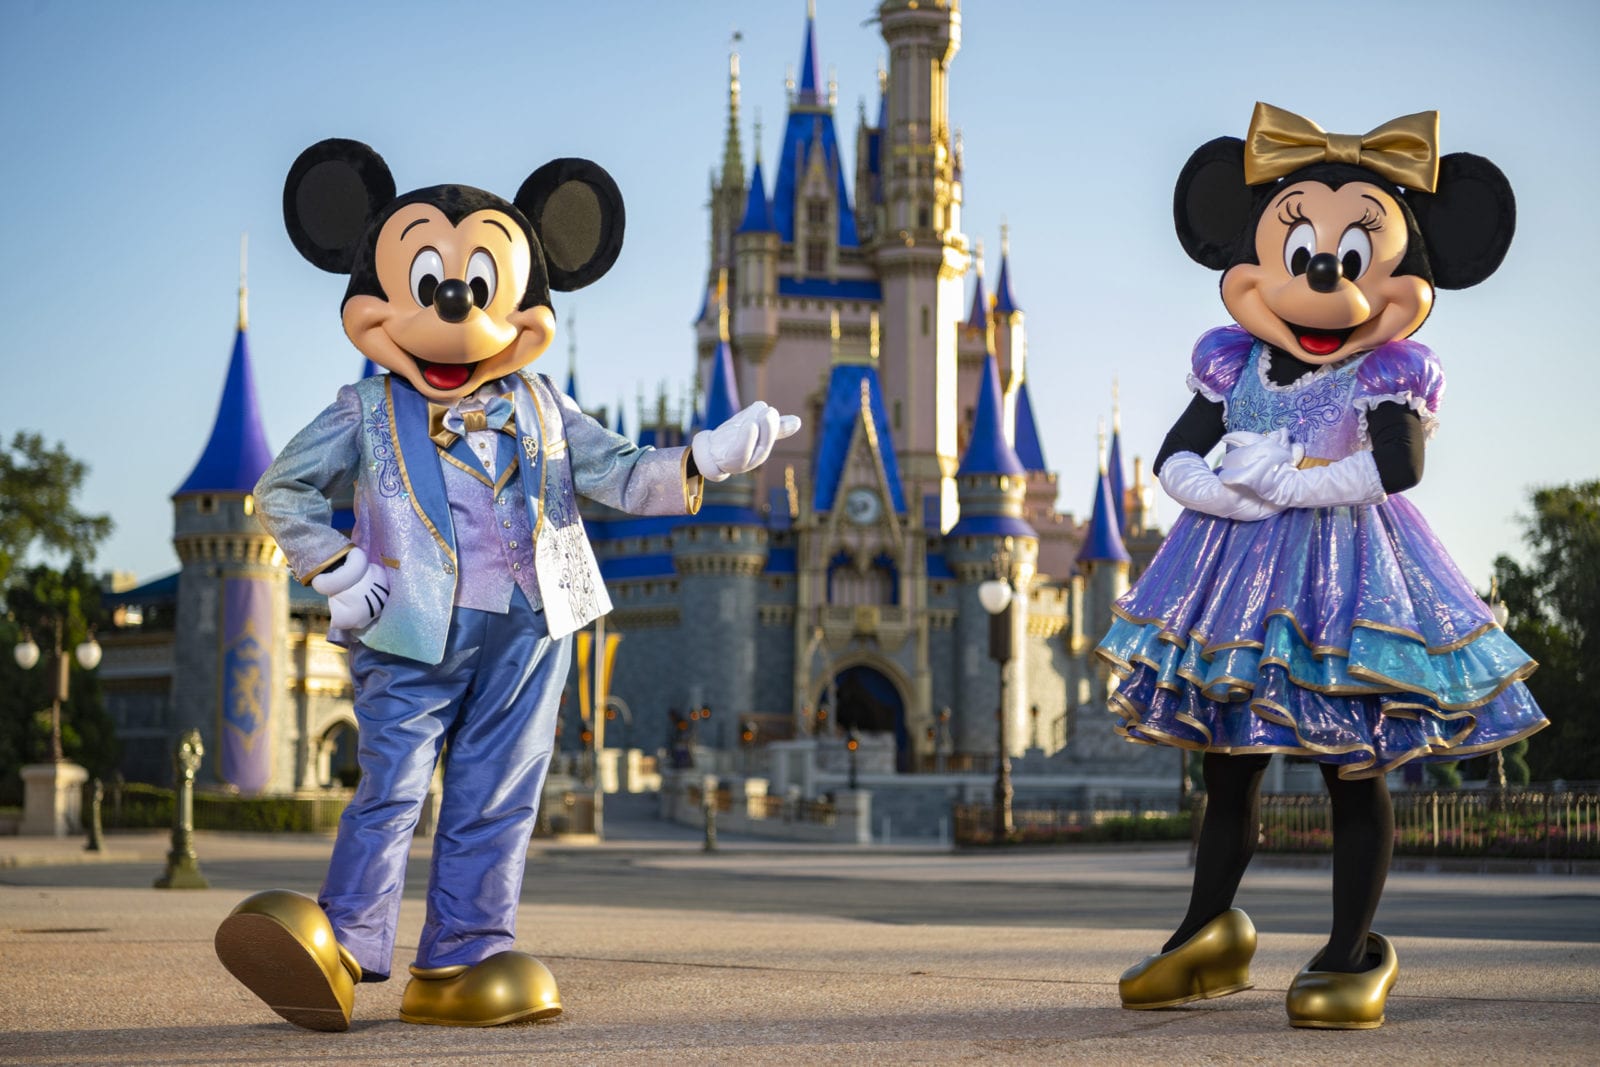 The World's Most Magical Celebration at Walt Disney World